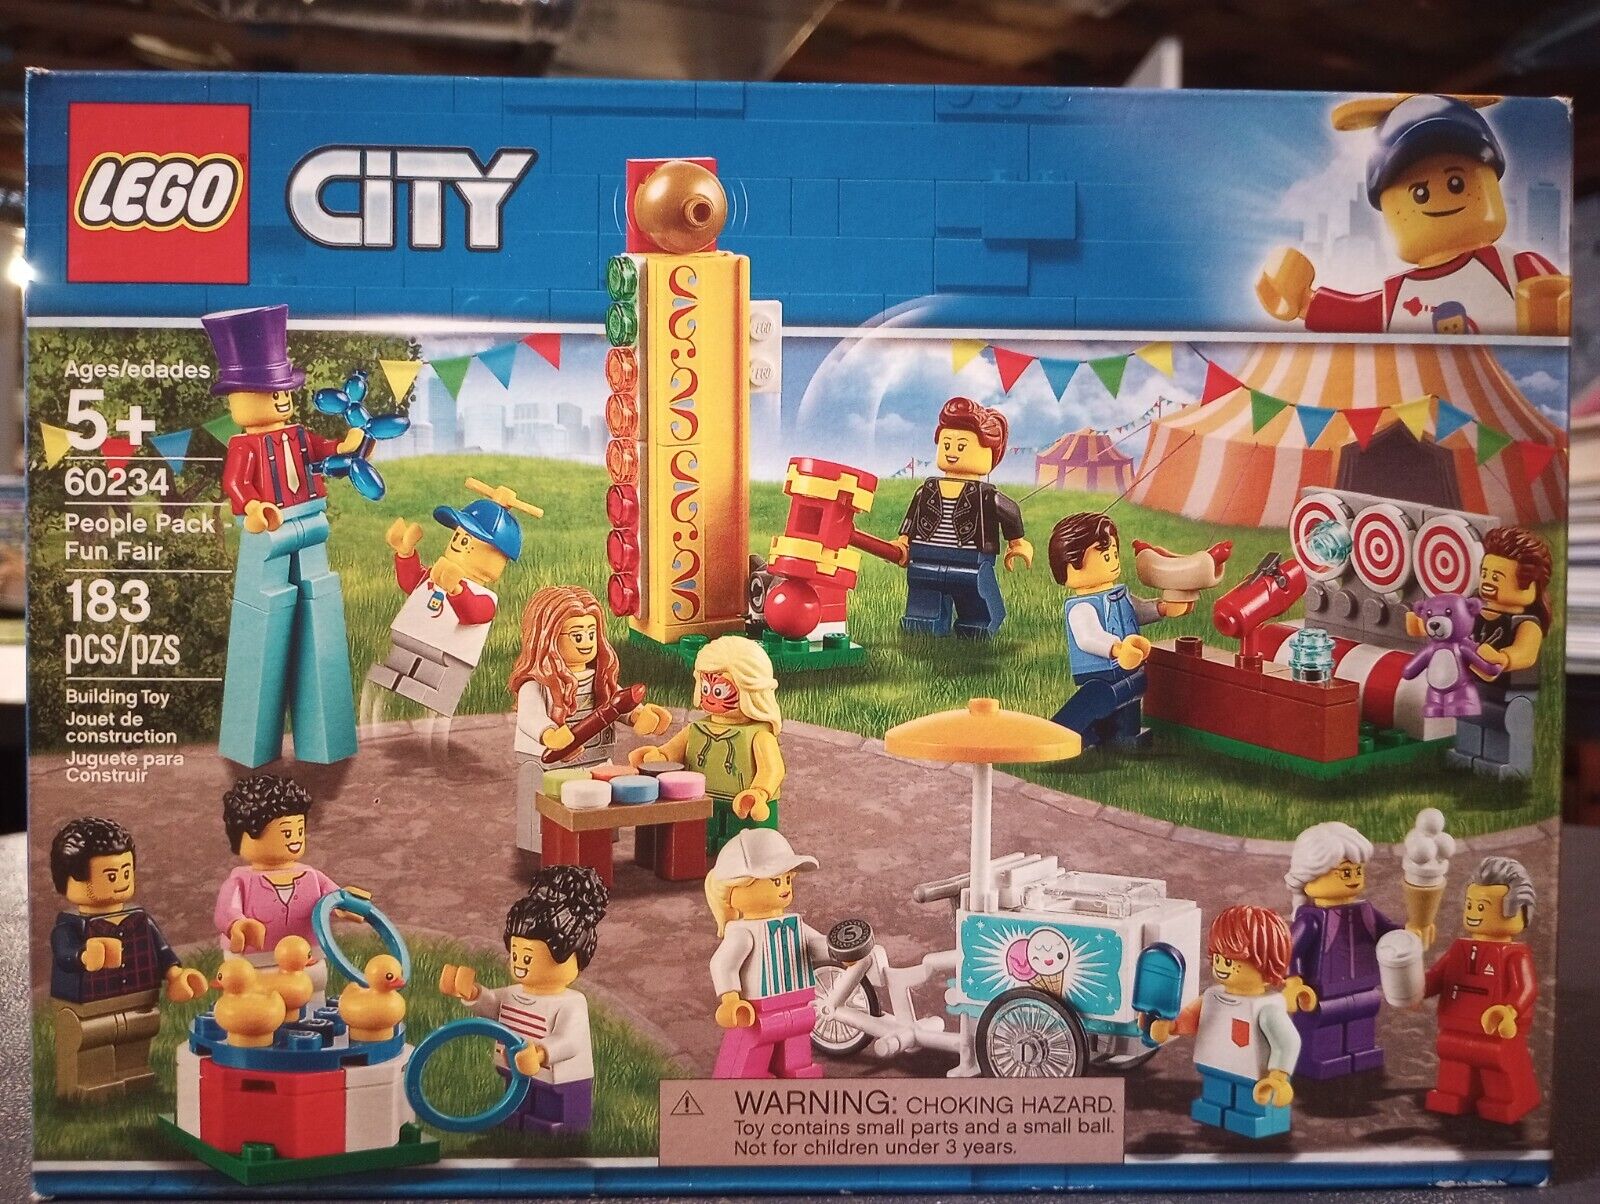 Lego City 60234 People Pack Fun Fair 183pcs 14 Minifigures New Sealed 2019